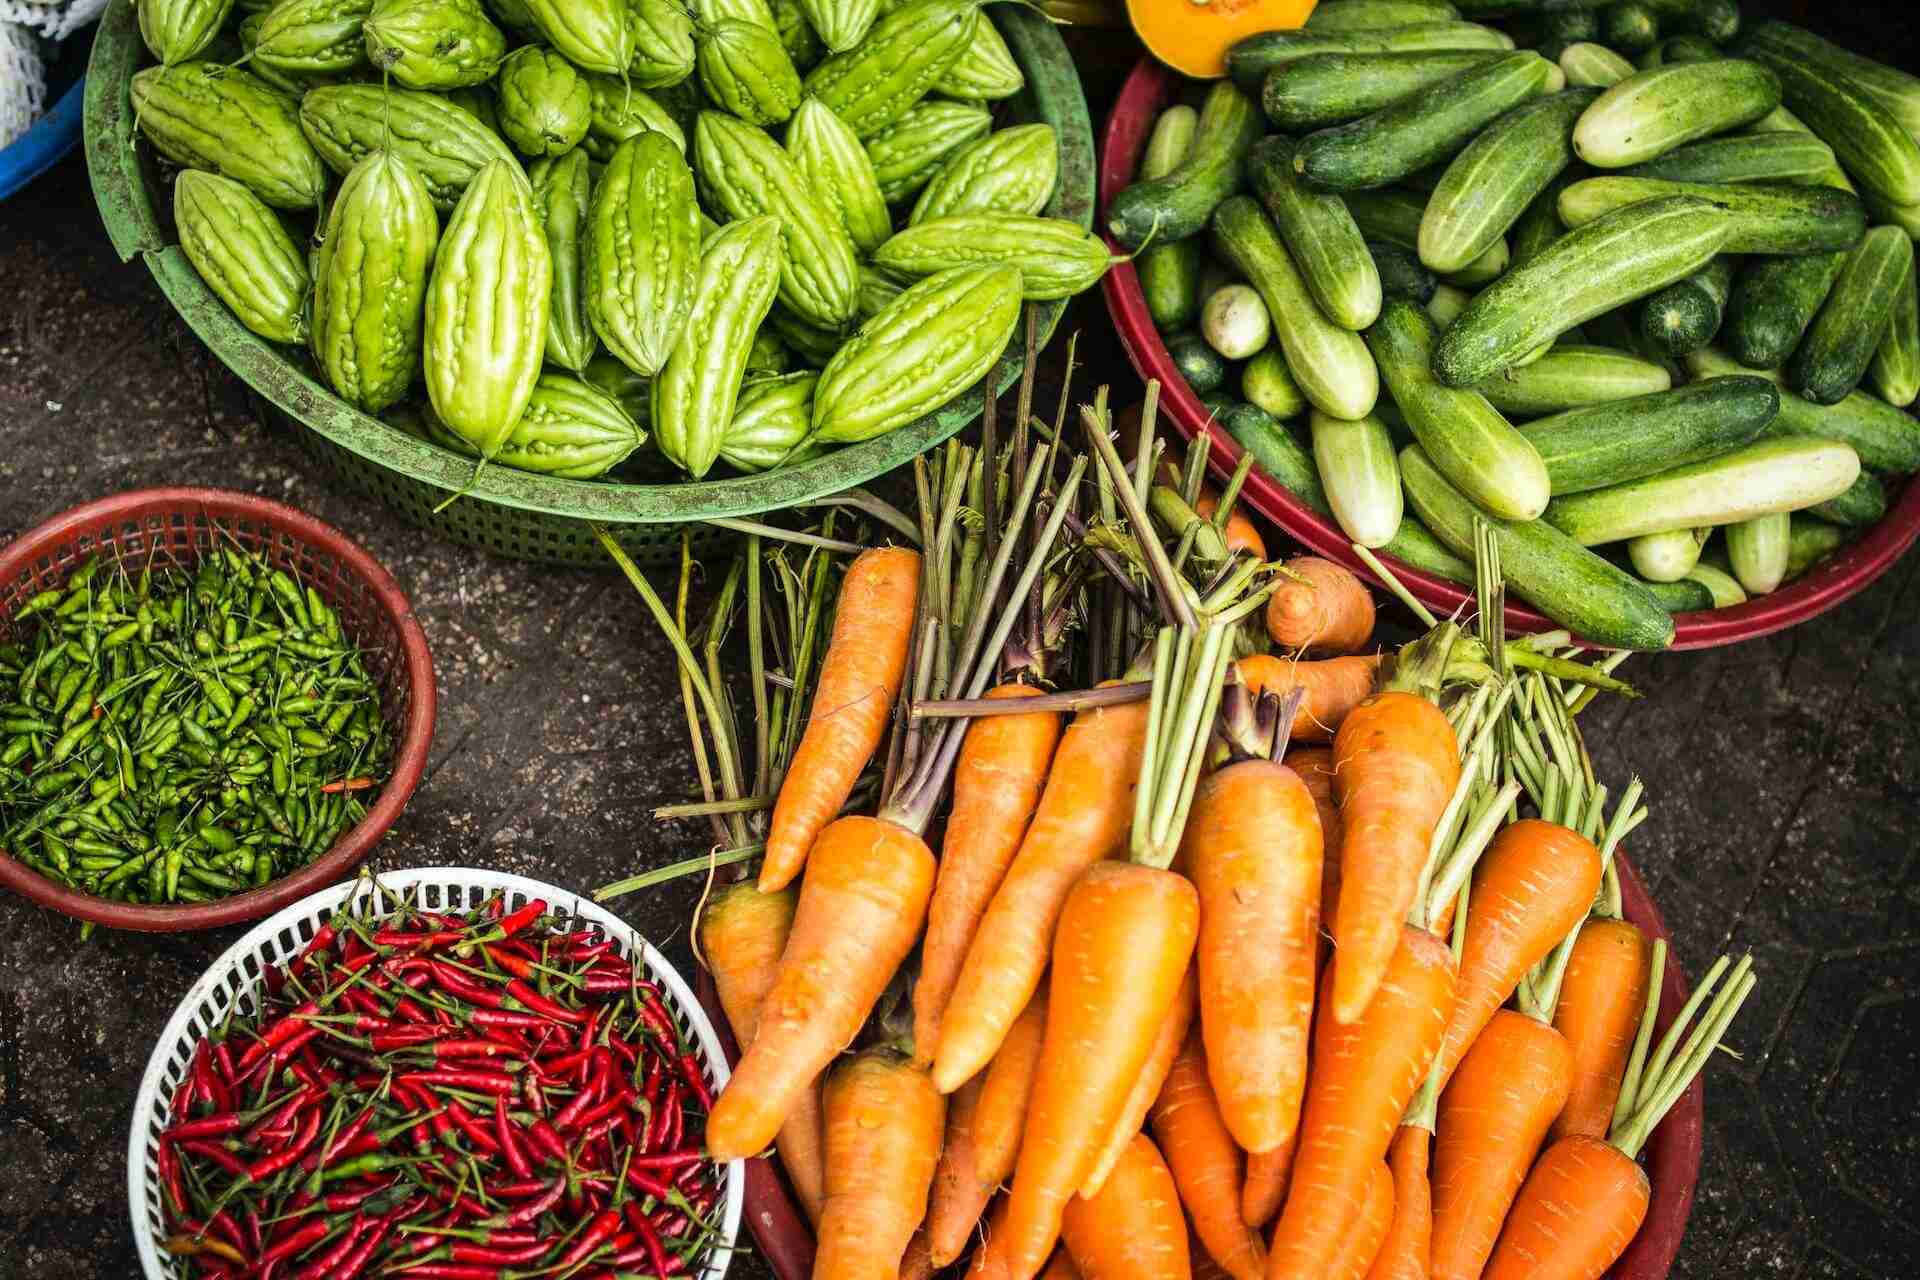 2. Securitatea alimentara - legume